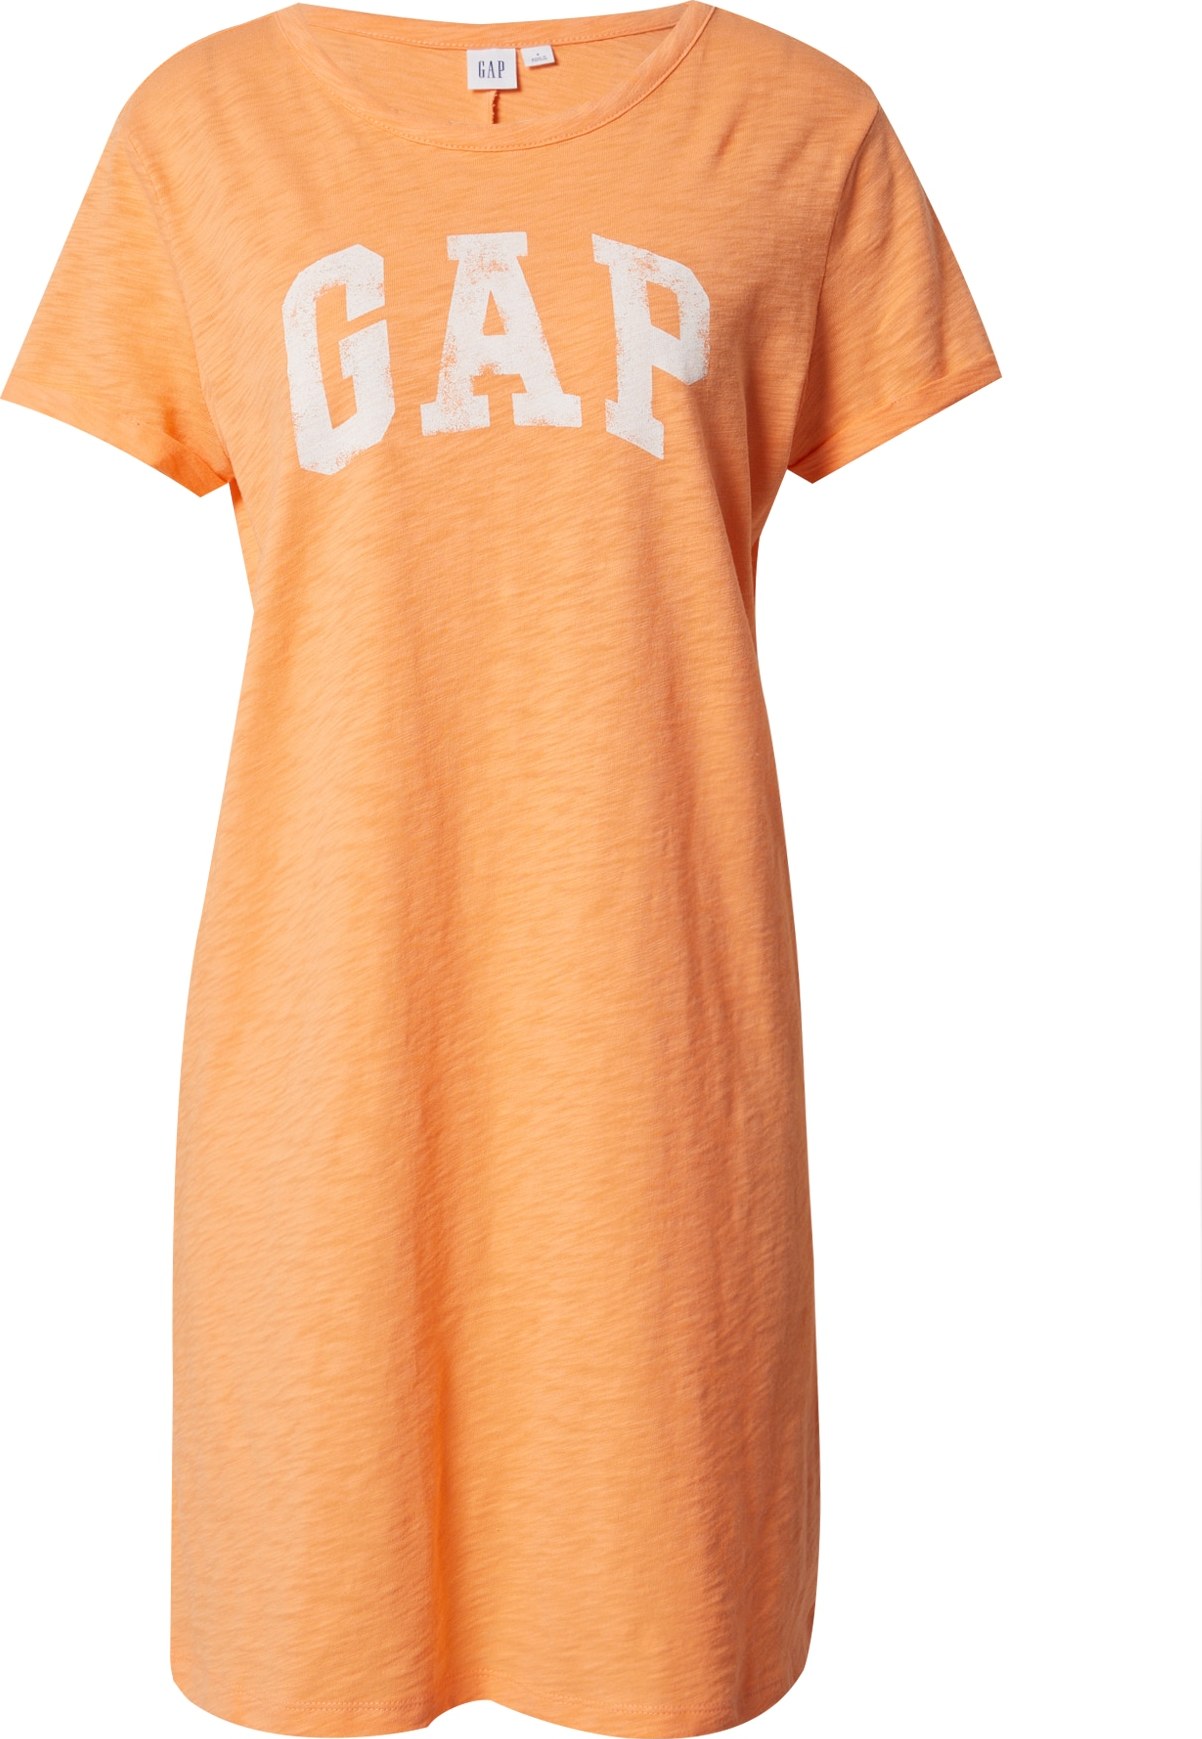 Šaty GAP oranžová / bílá